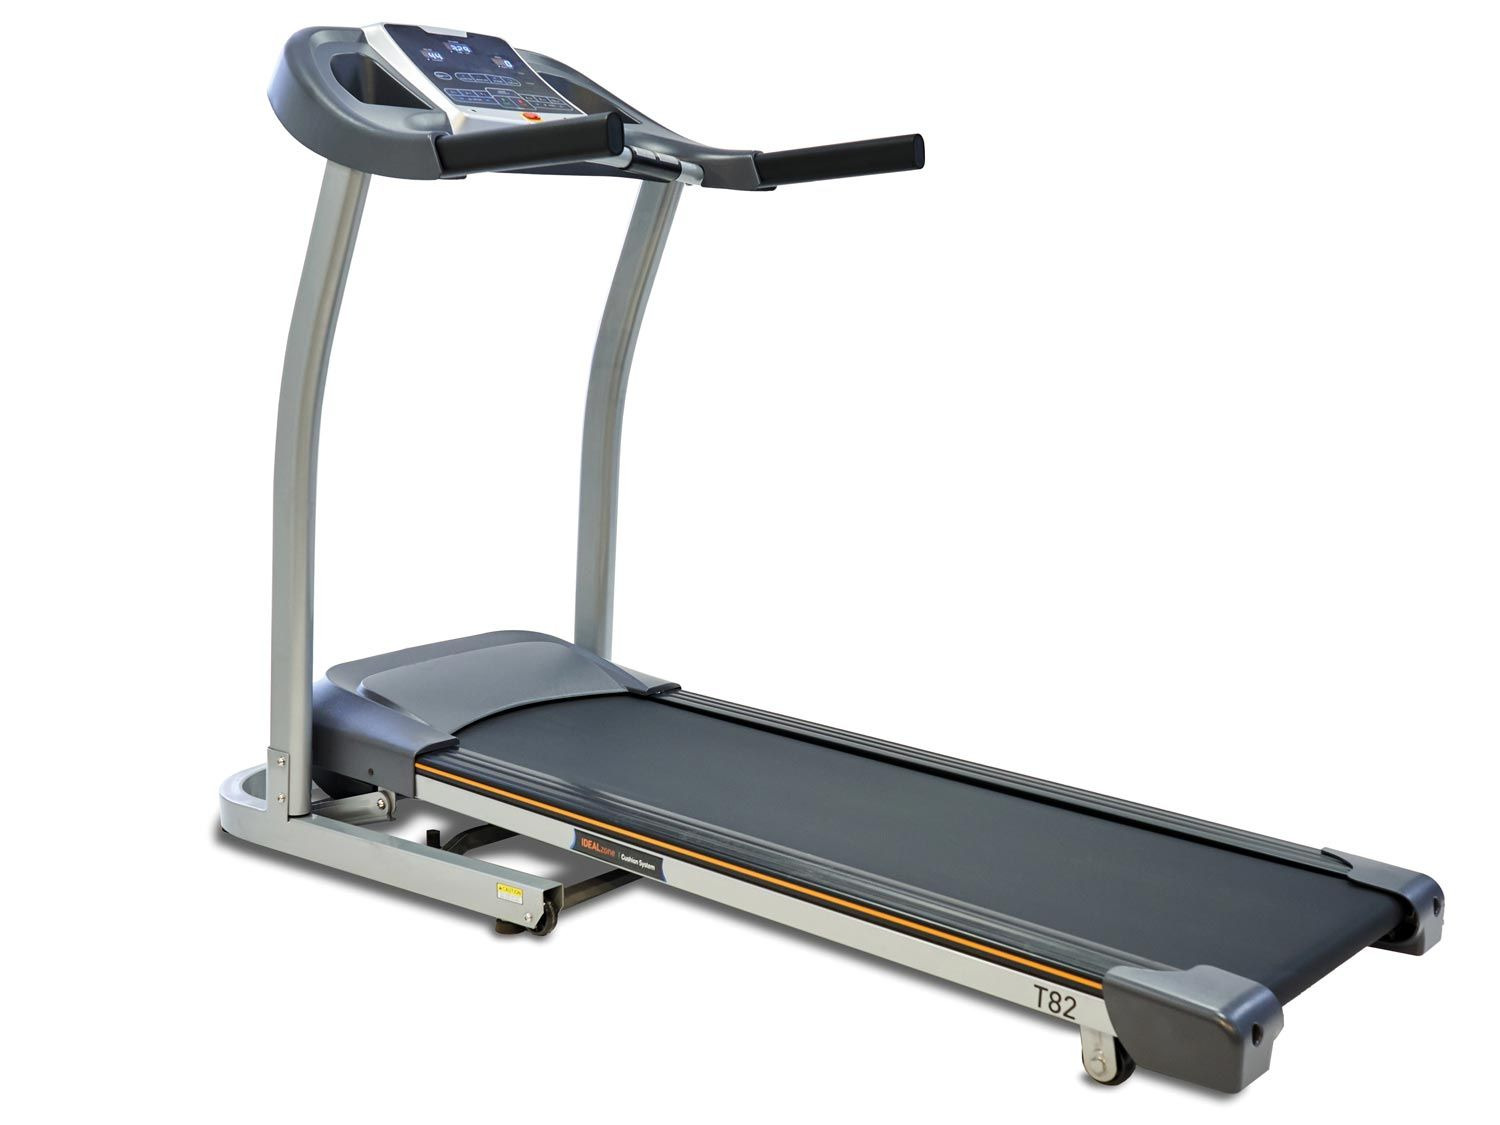 Horizon Fitness online | LIDL Laufband kaufen »T82«